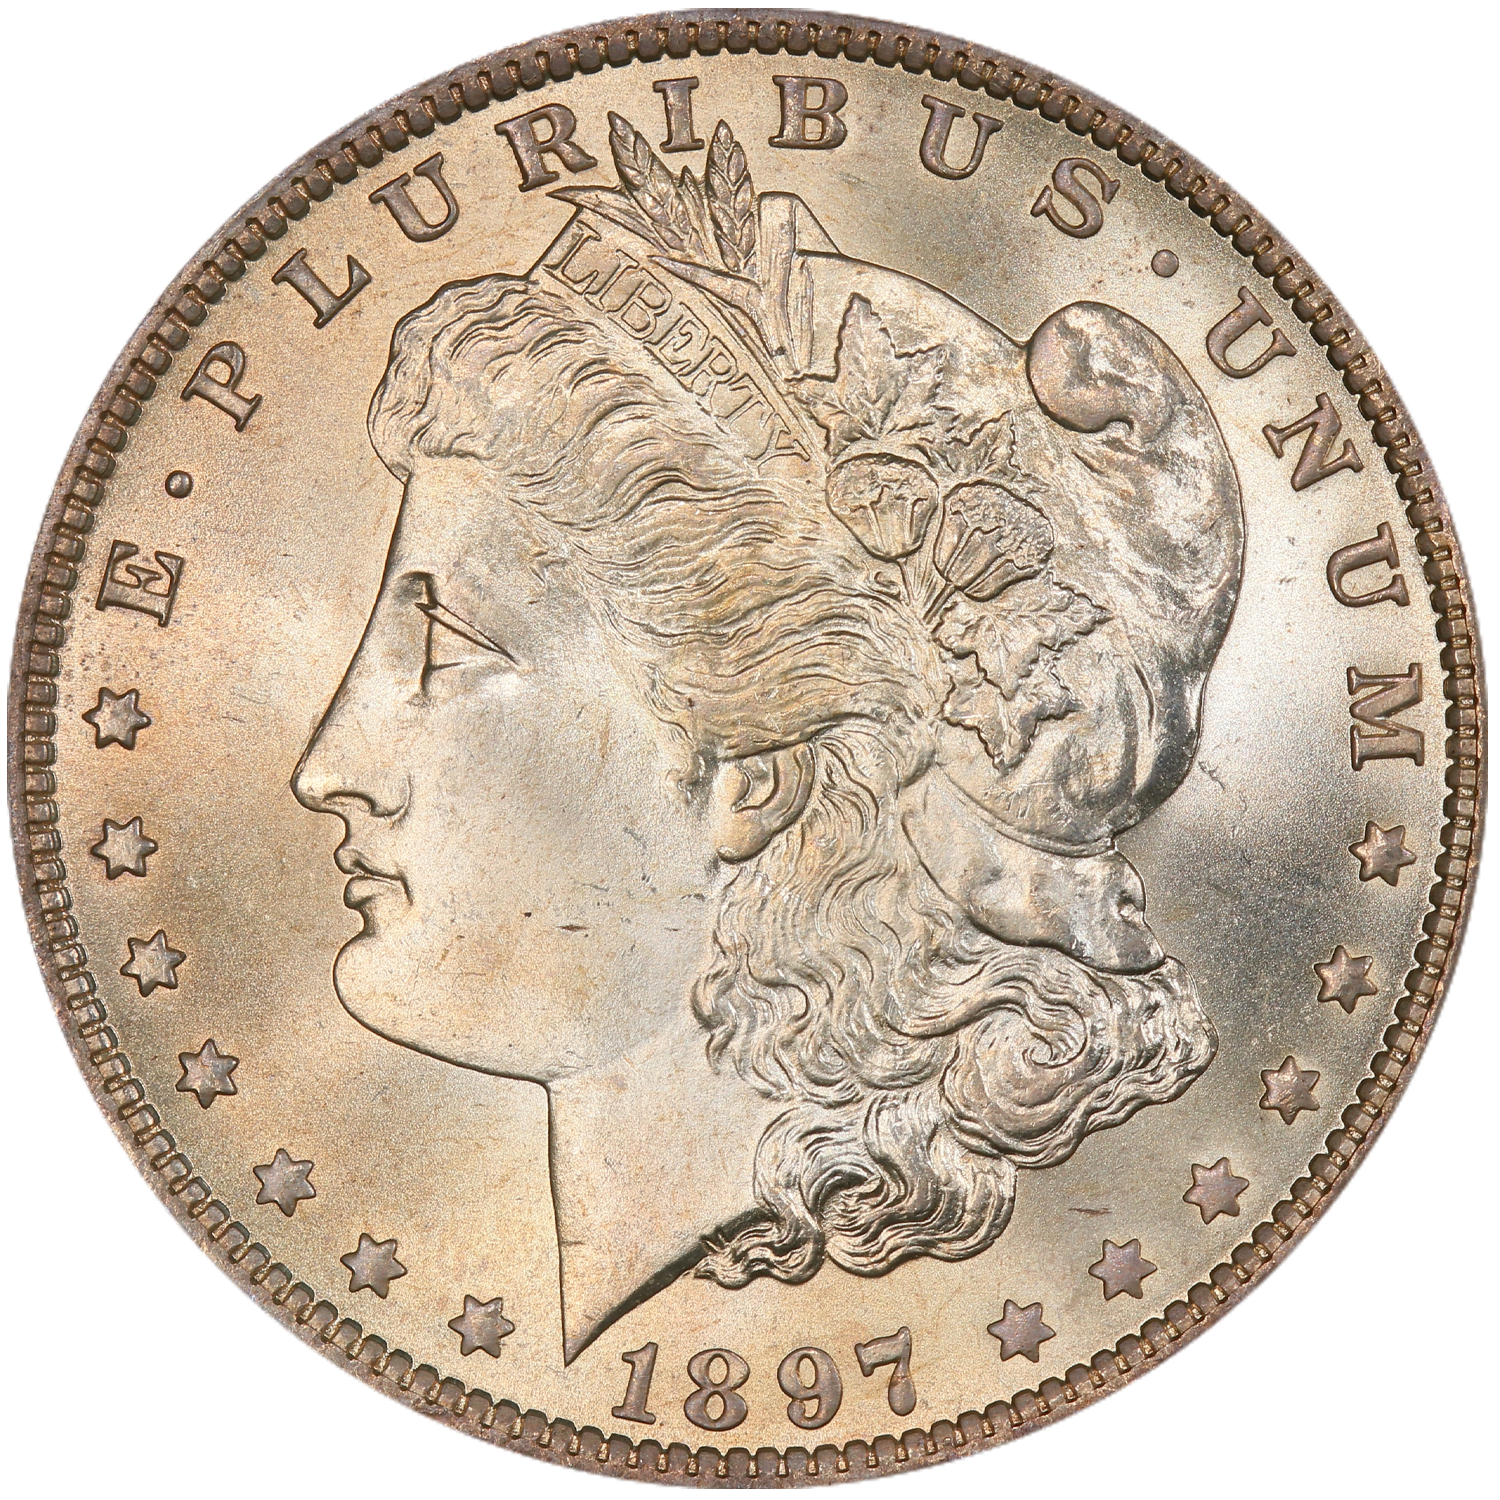 1897 new orleans mint morgan silver dollar value